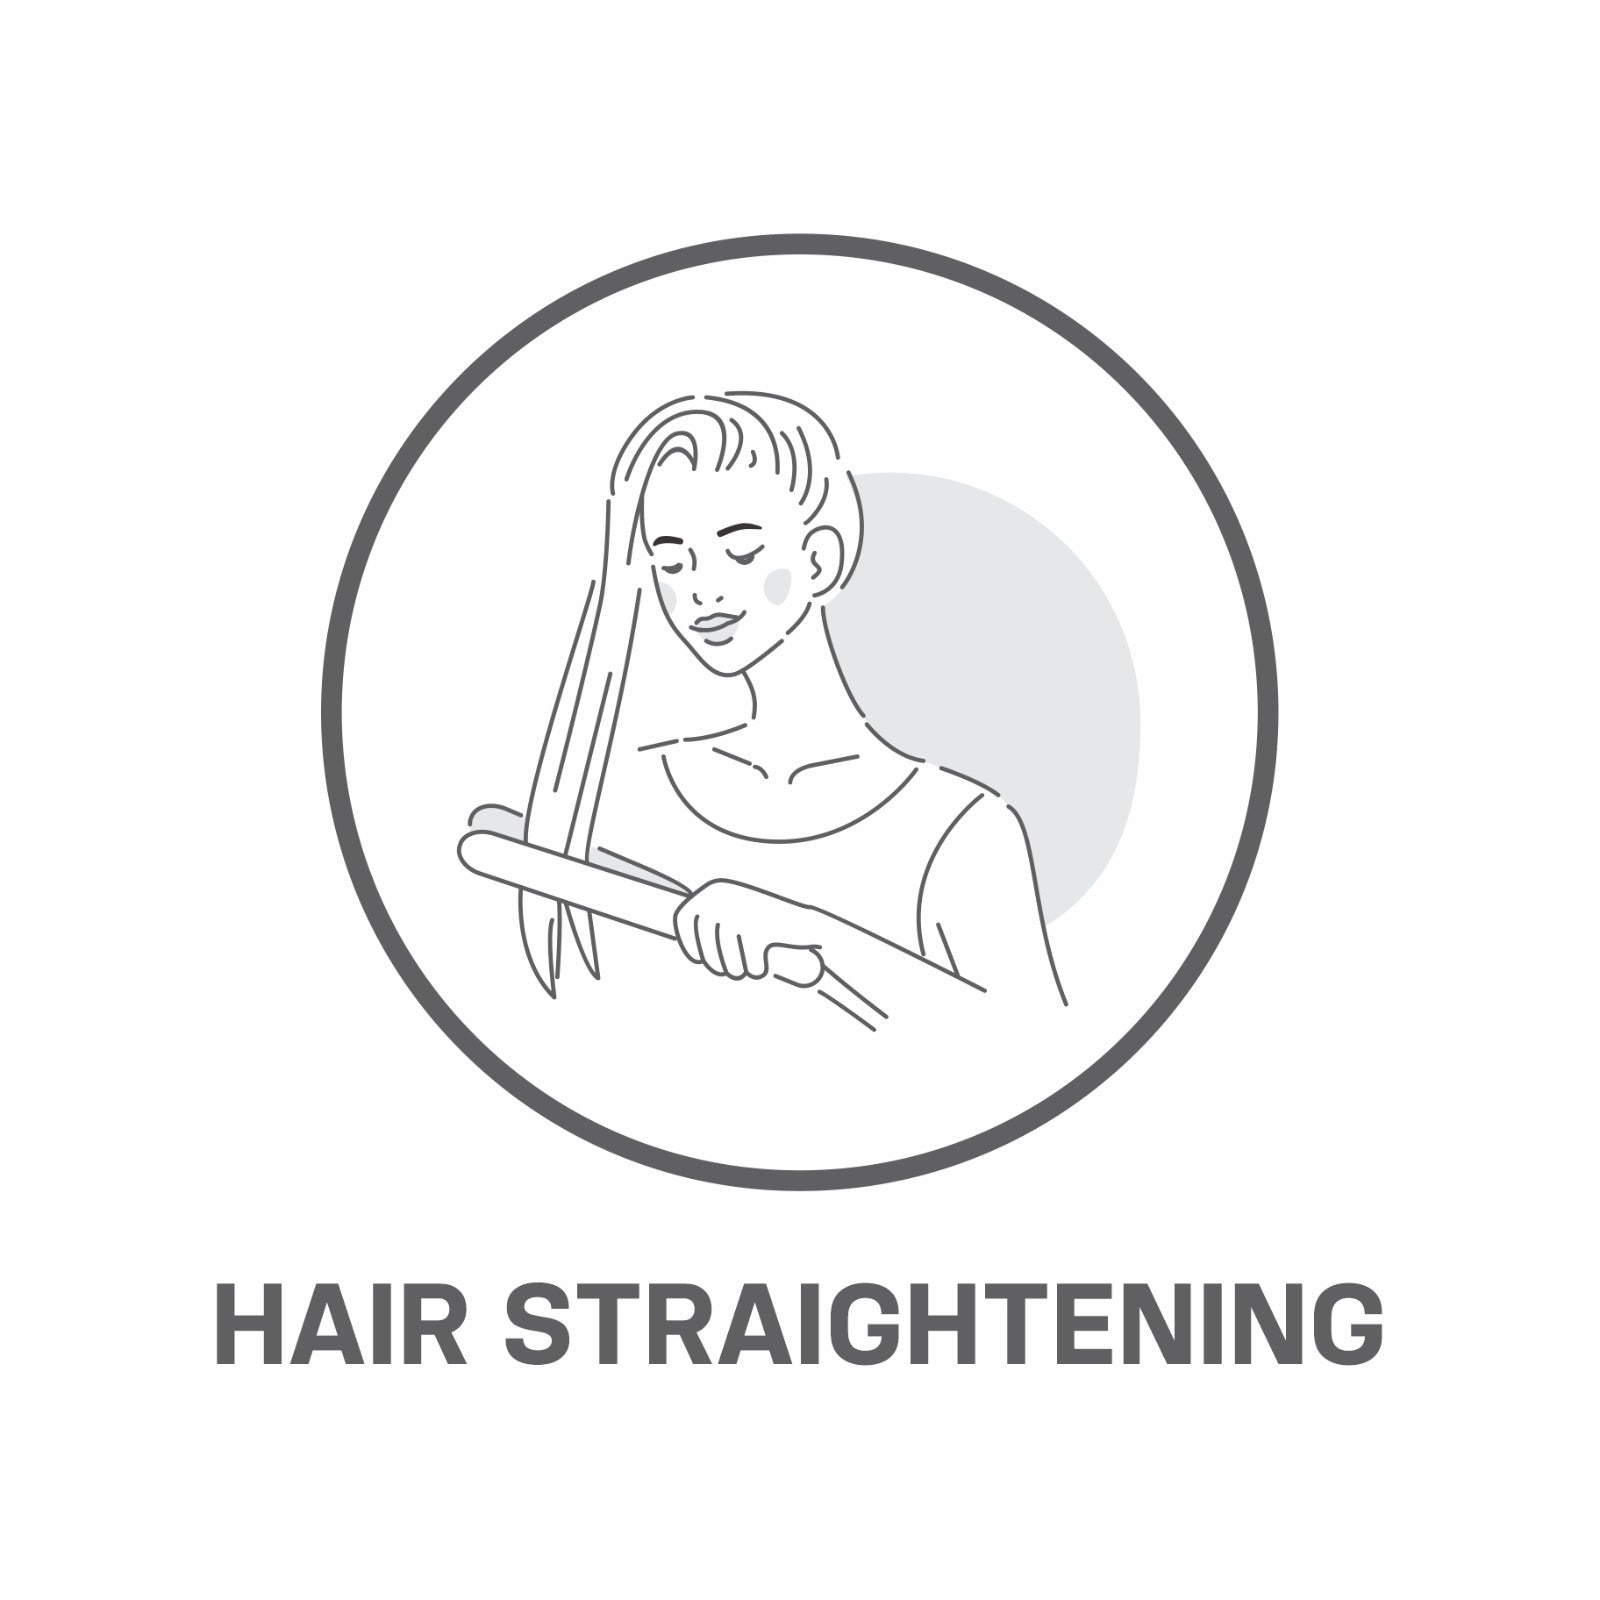 Hair Straightening